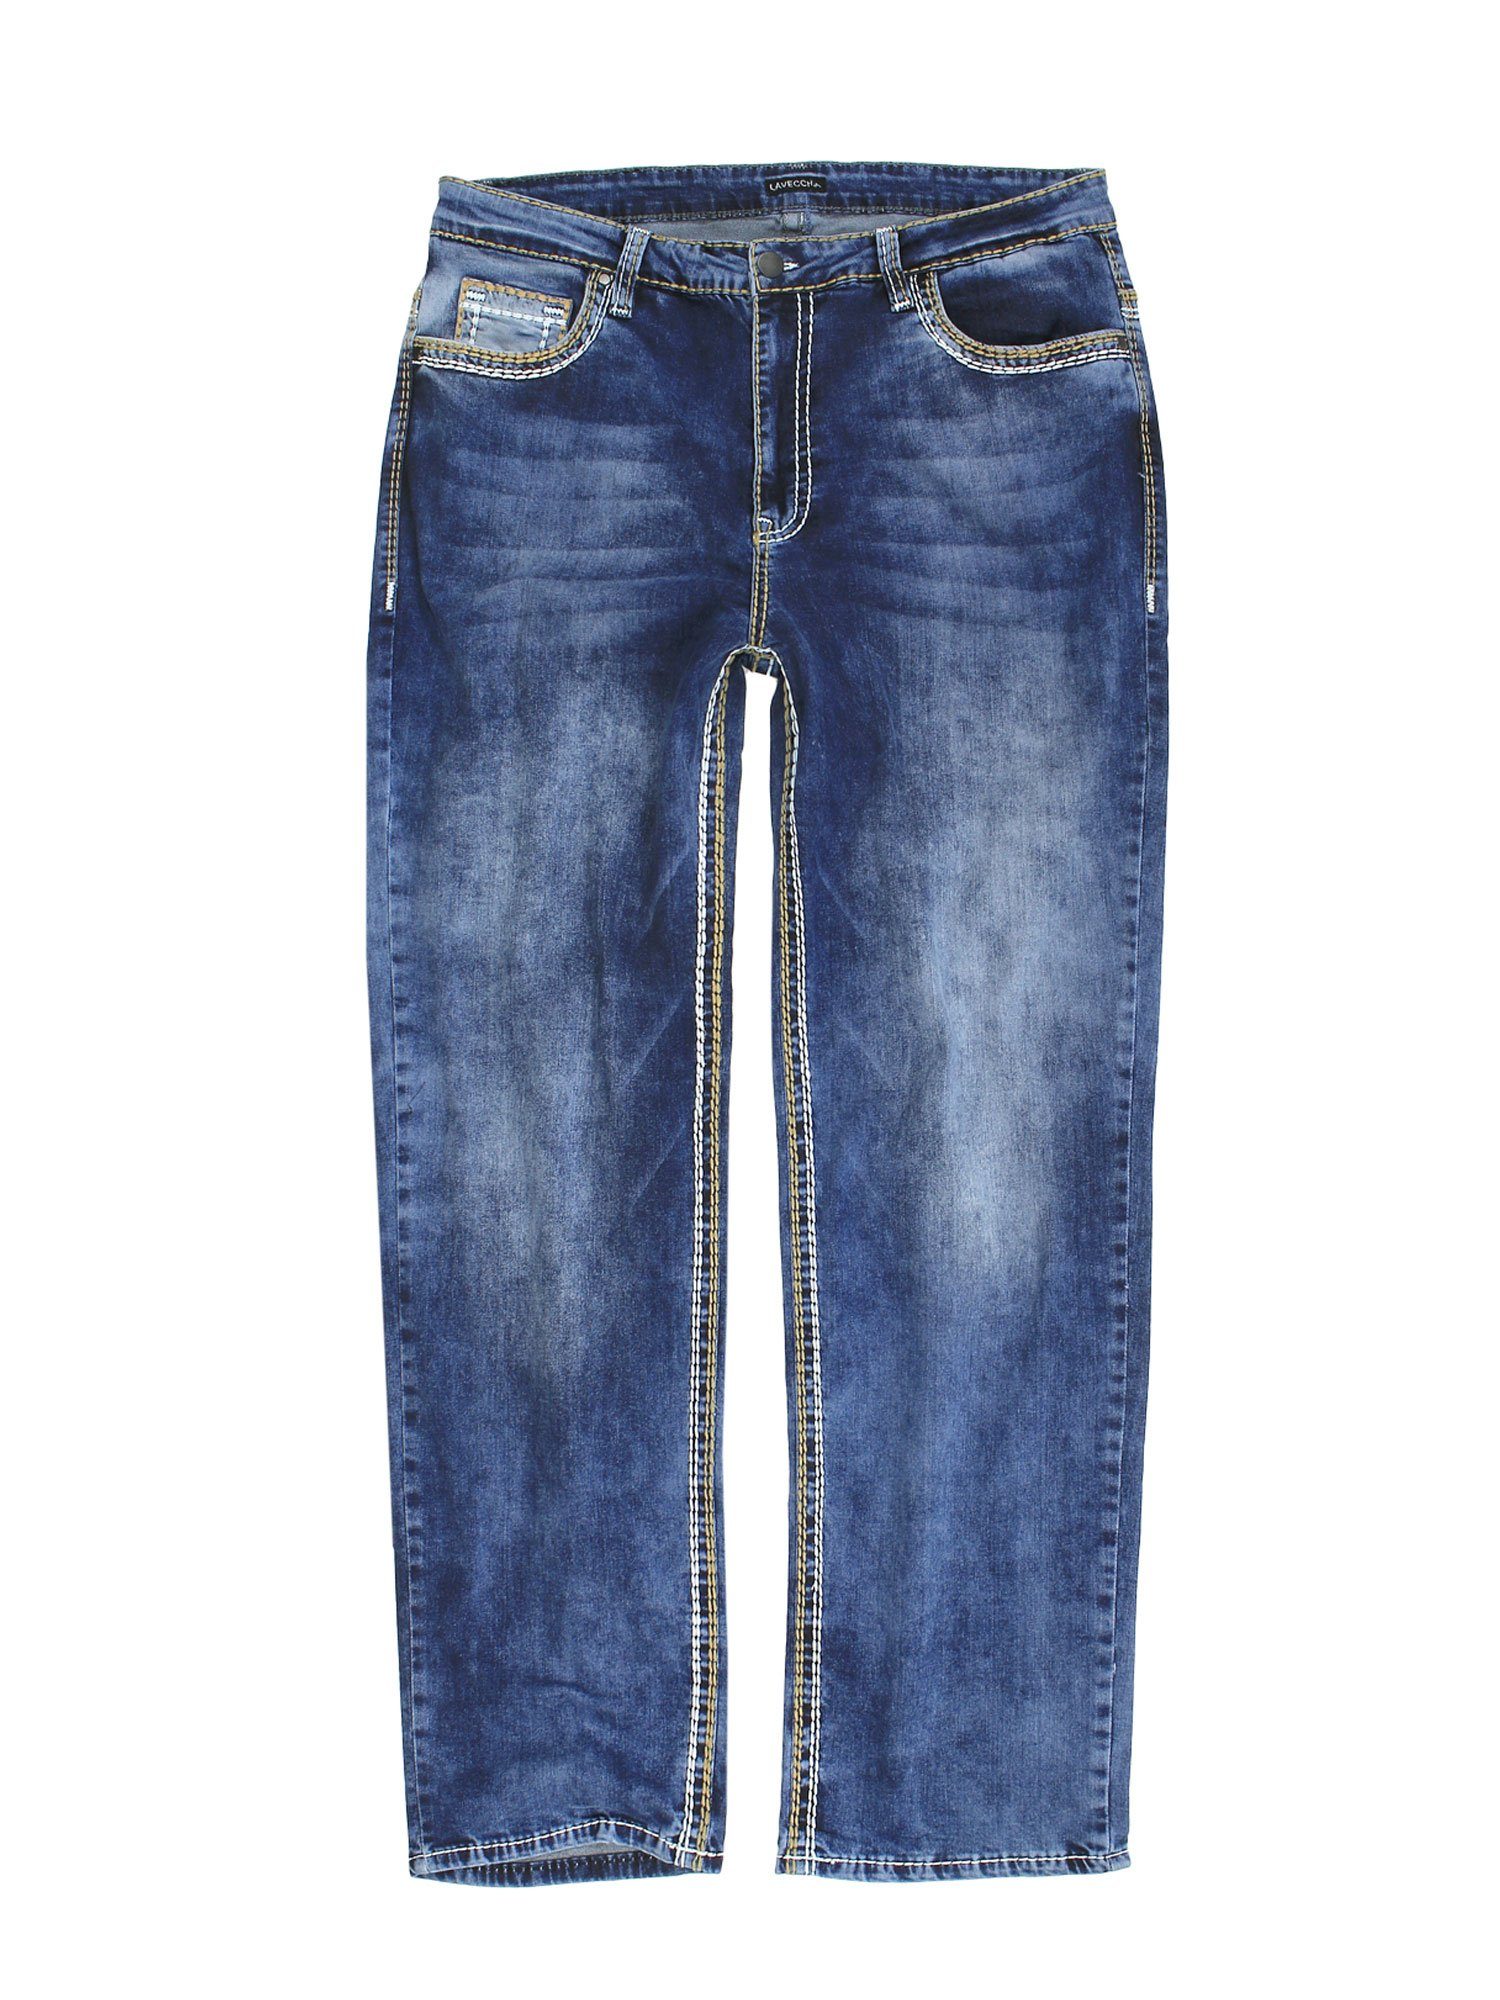 Lavecchia Comfort-fit-Jeans Übergrößen Herren Jeanshose LV-503 Stretch mit Elasthan & dicker Naht stoneblau | Stretchjeans